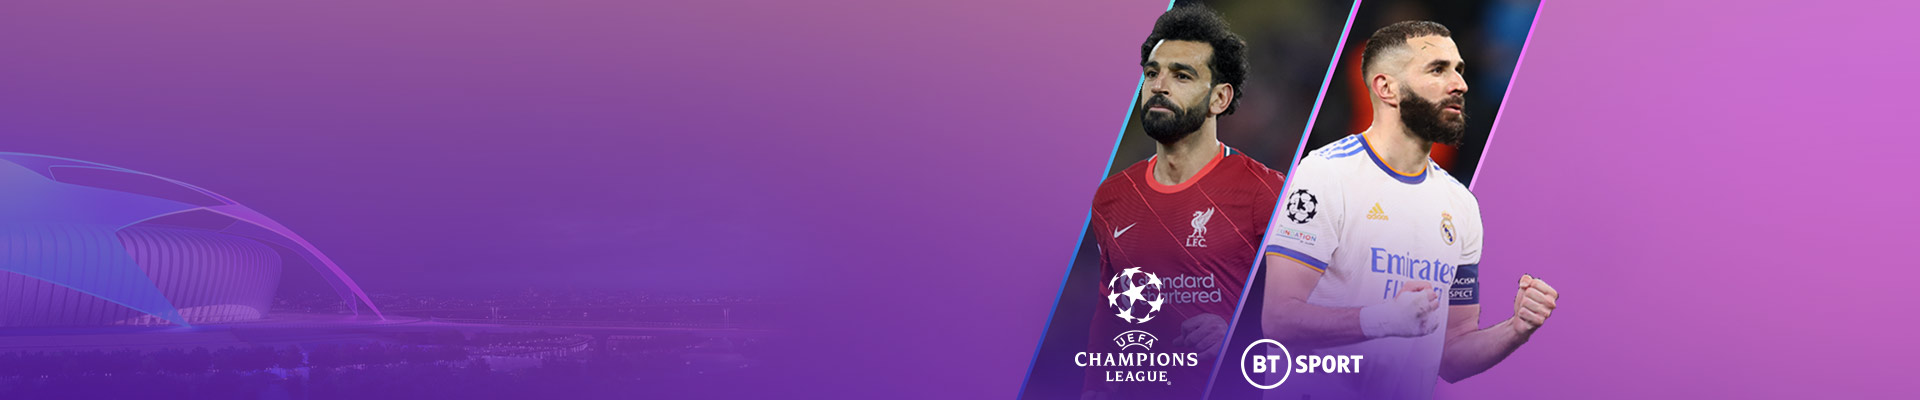 Champions League final, live on BT Sport